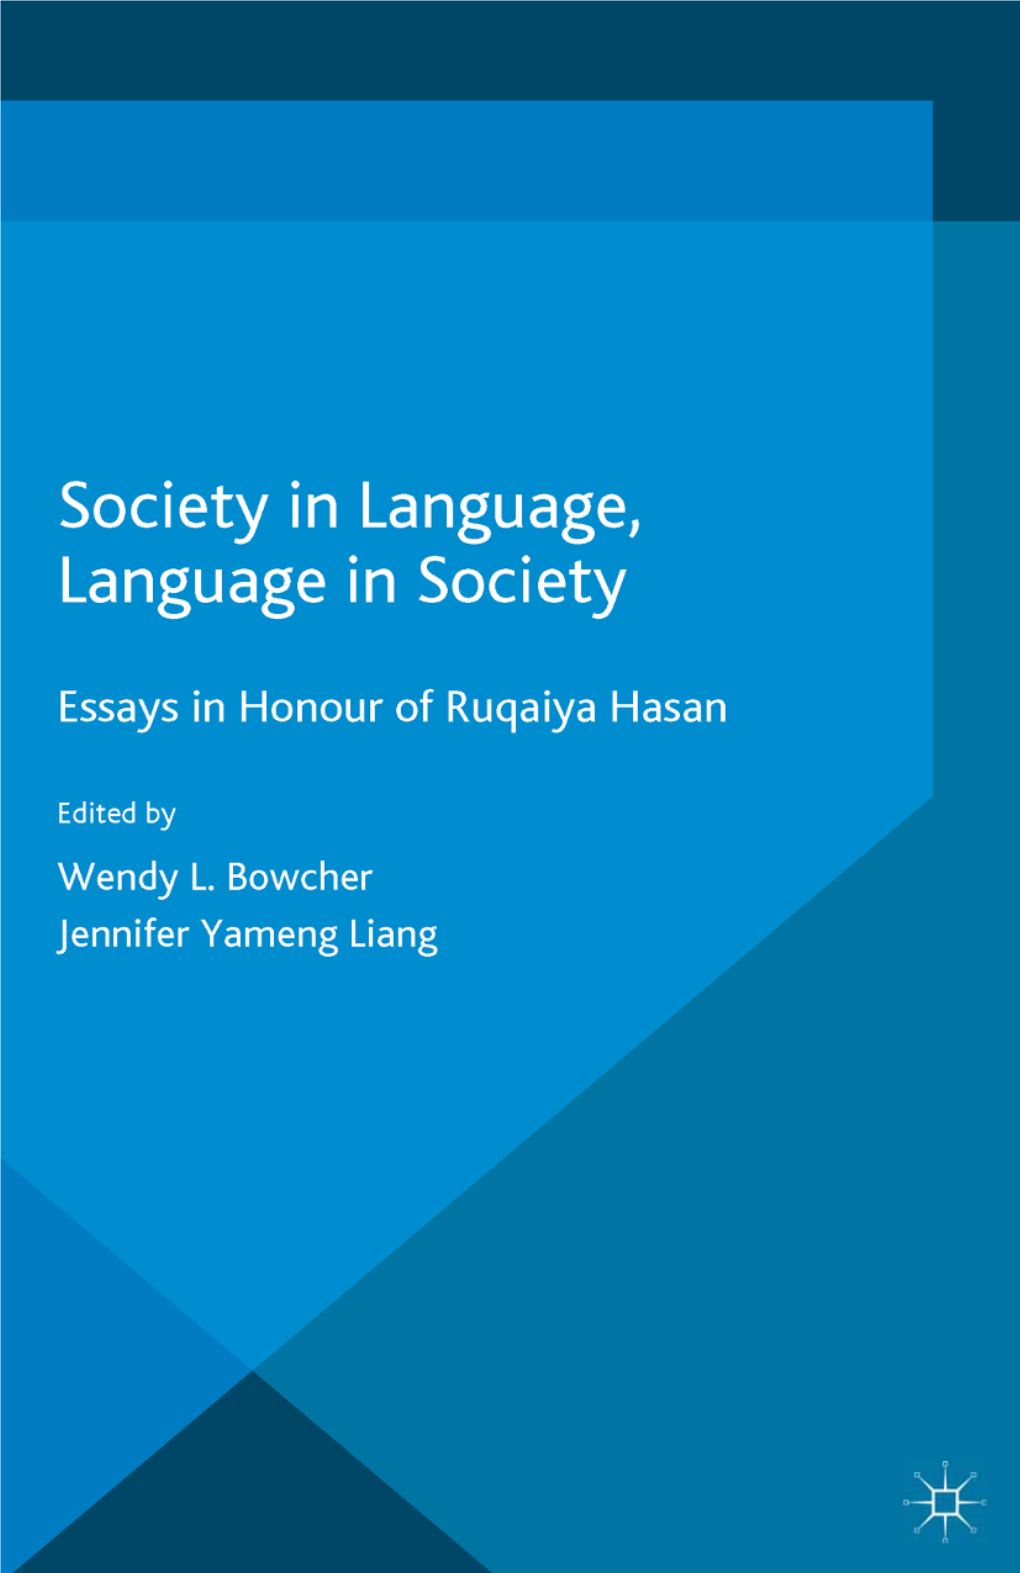 Language in Society 2016.Pdf